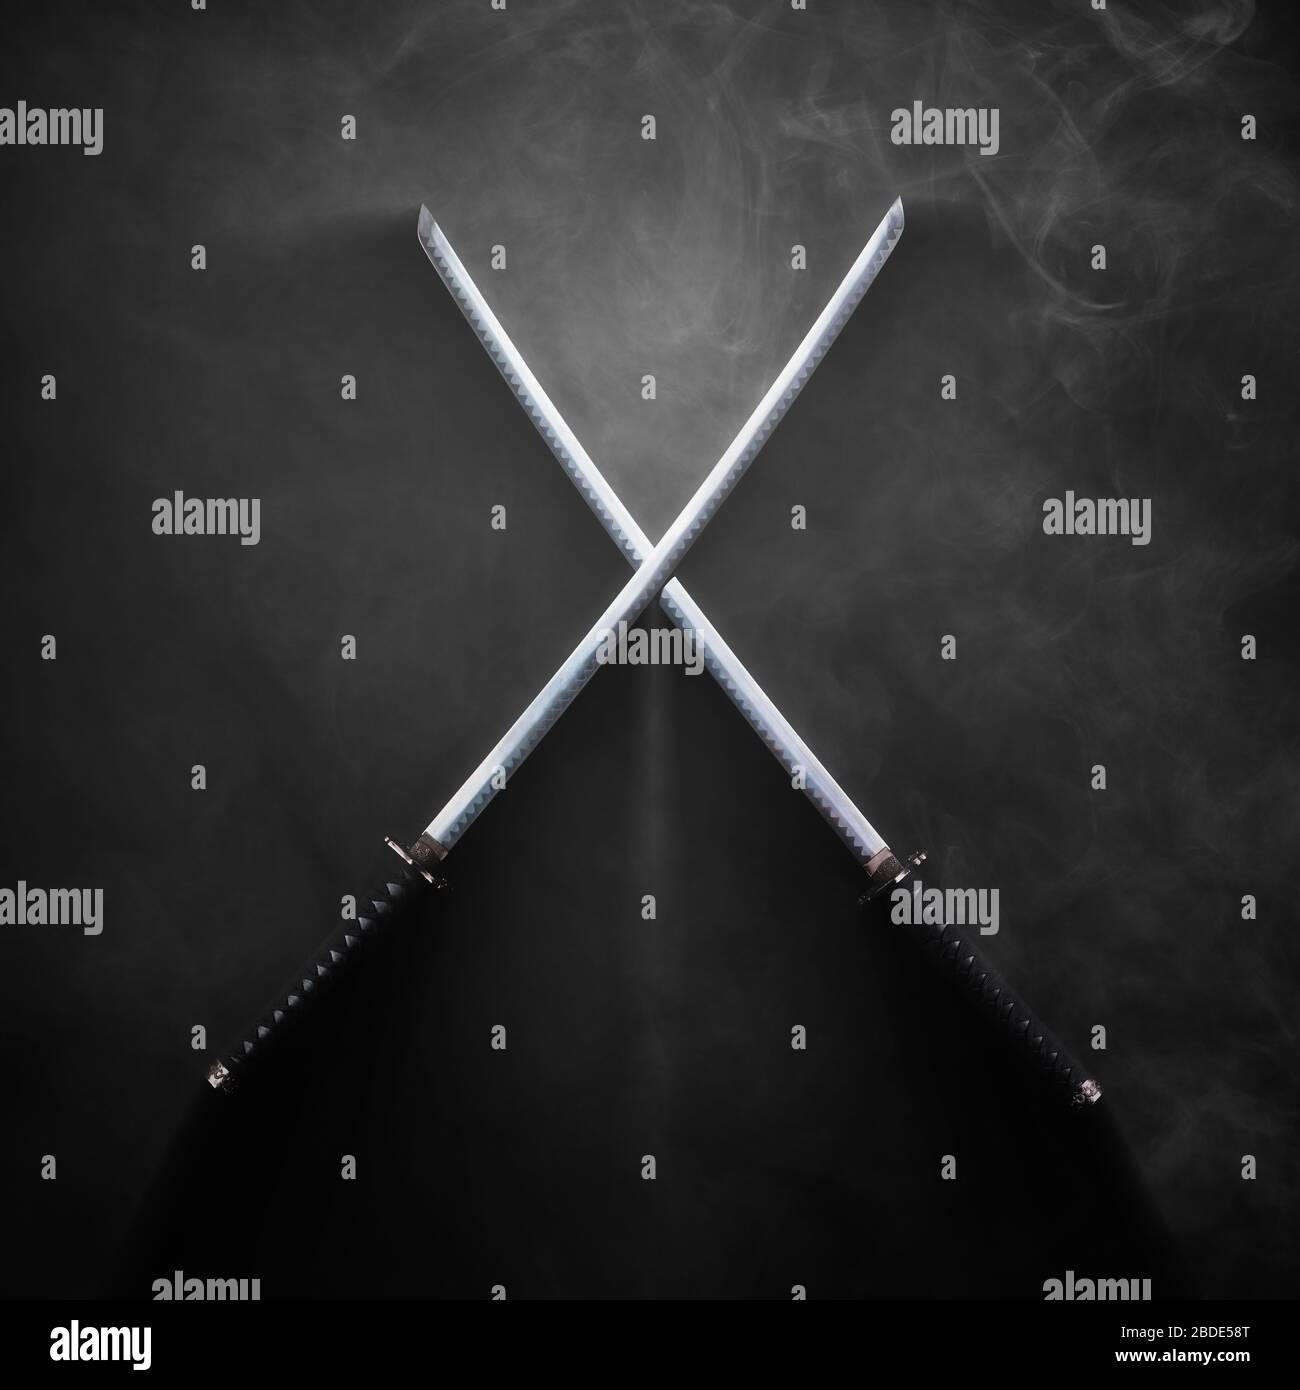 Dark image - Two katanas with crossed blades in dramatic smoke Stock Photo